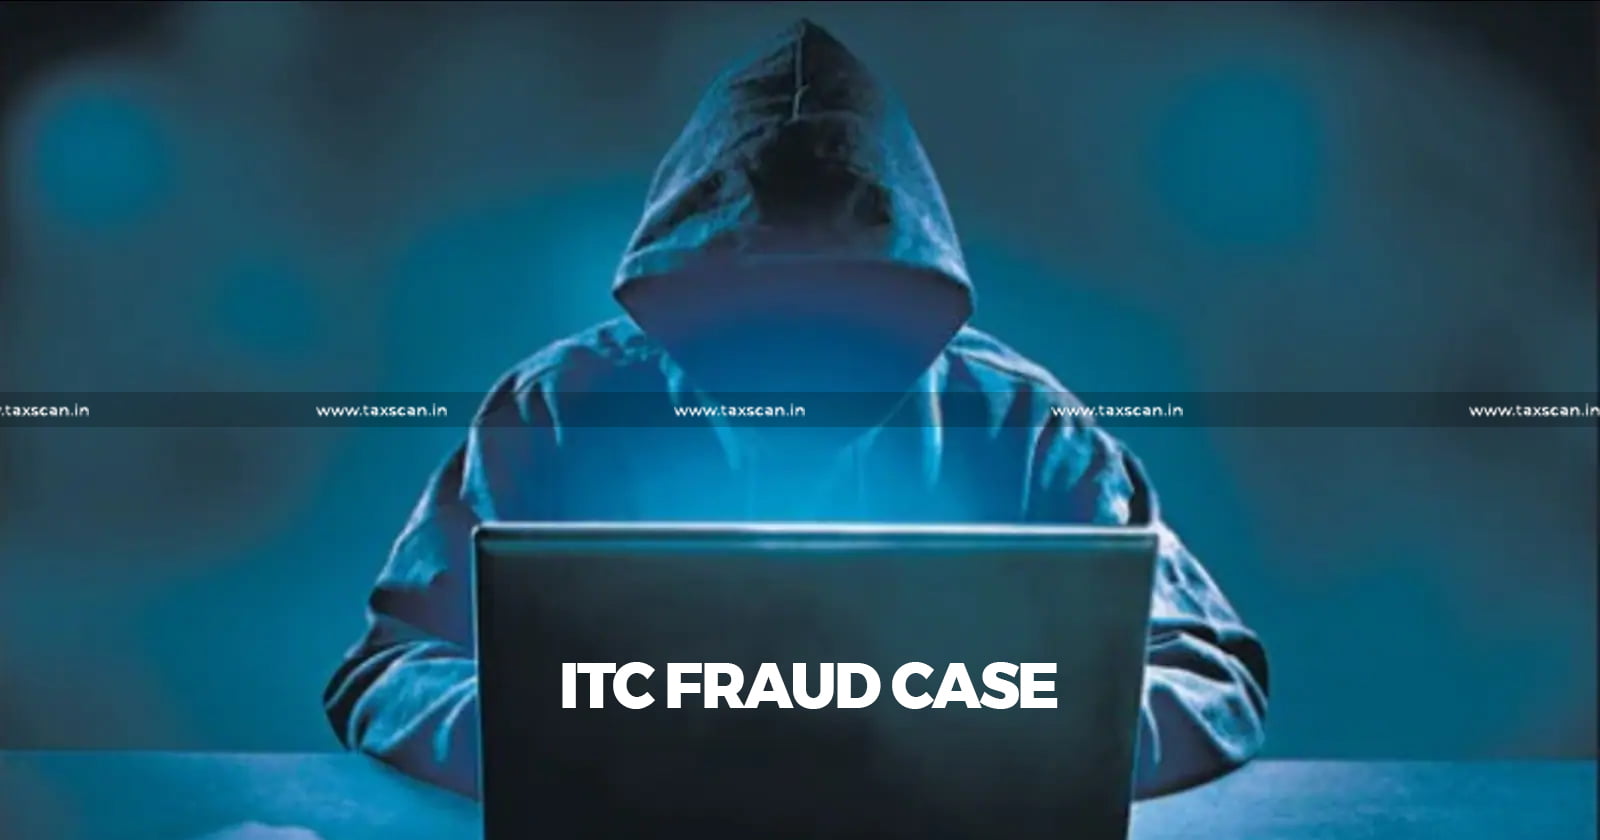 ITC Fraud - GST Evasion - Rajasthan High Court - bail - Gaurav Kakkar in ITC Fraud case - ITC Fraud case - GST - taxscan